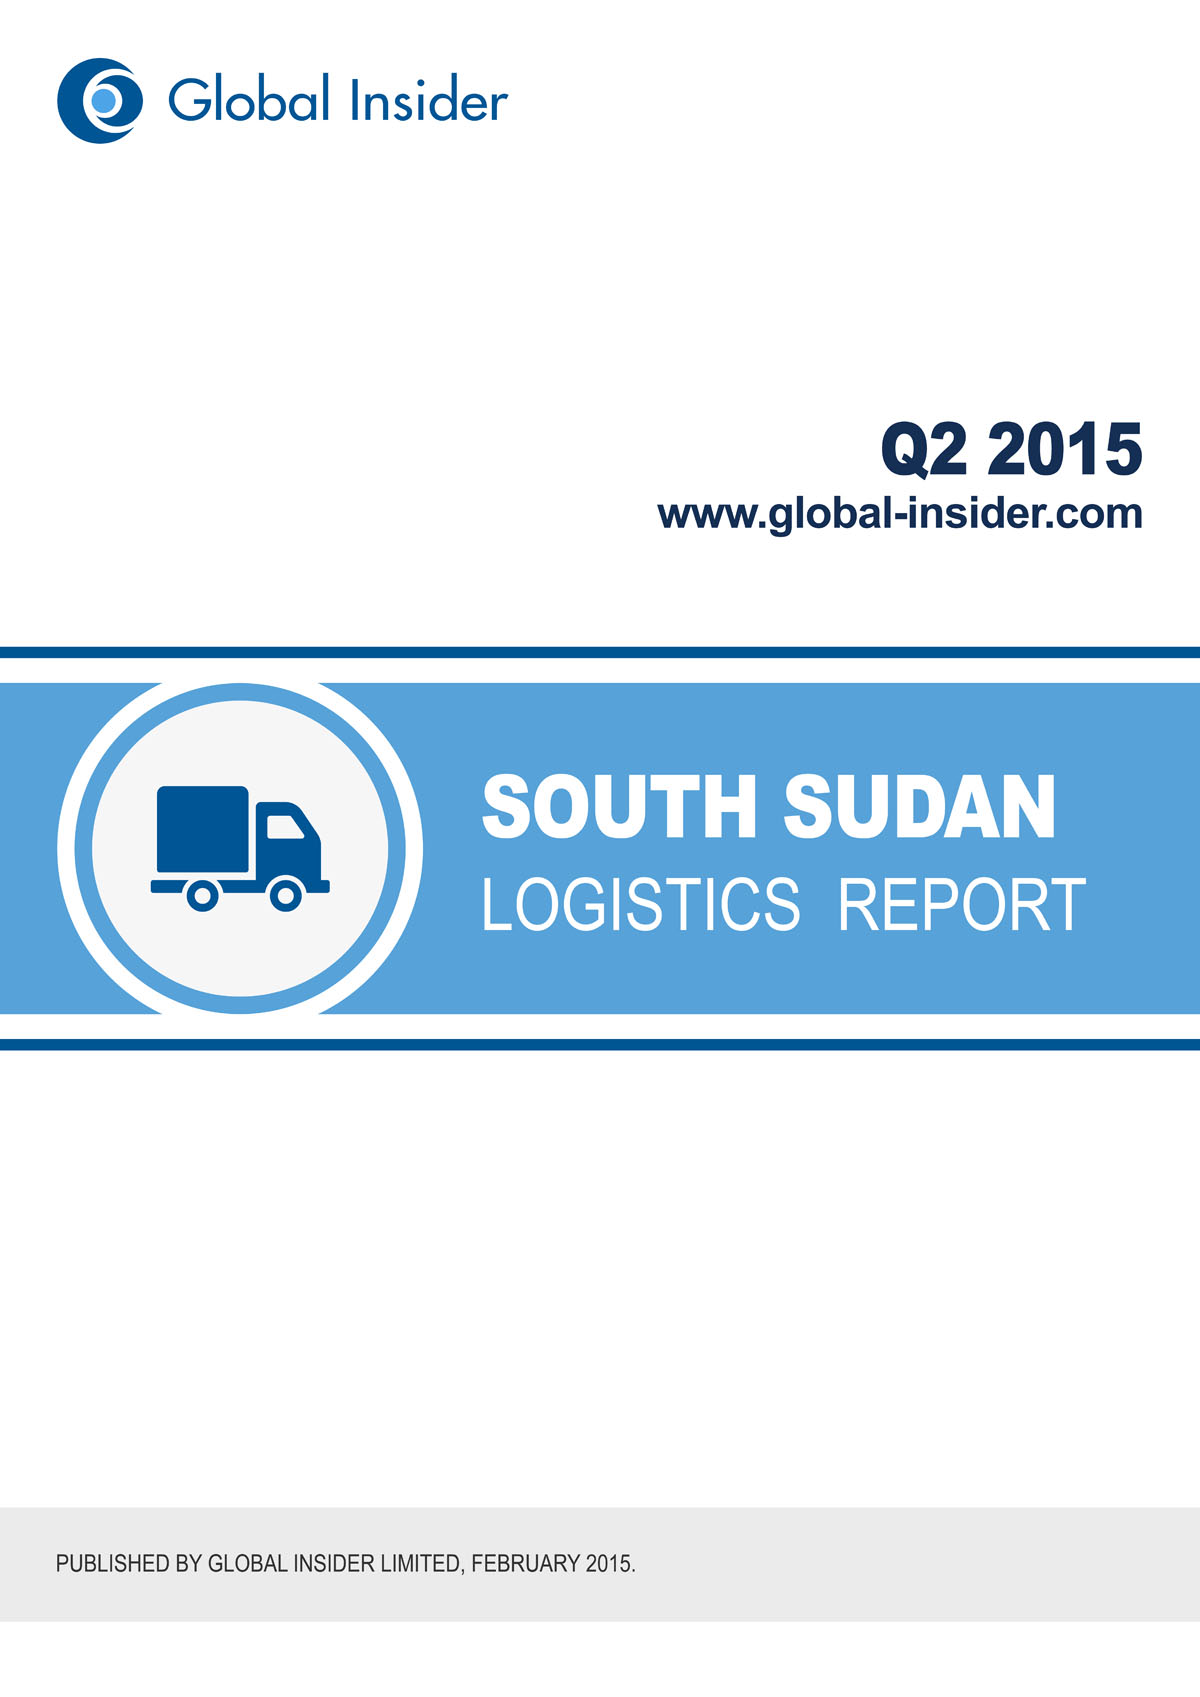 South Sudan Logistics Report